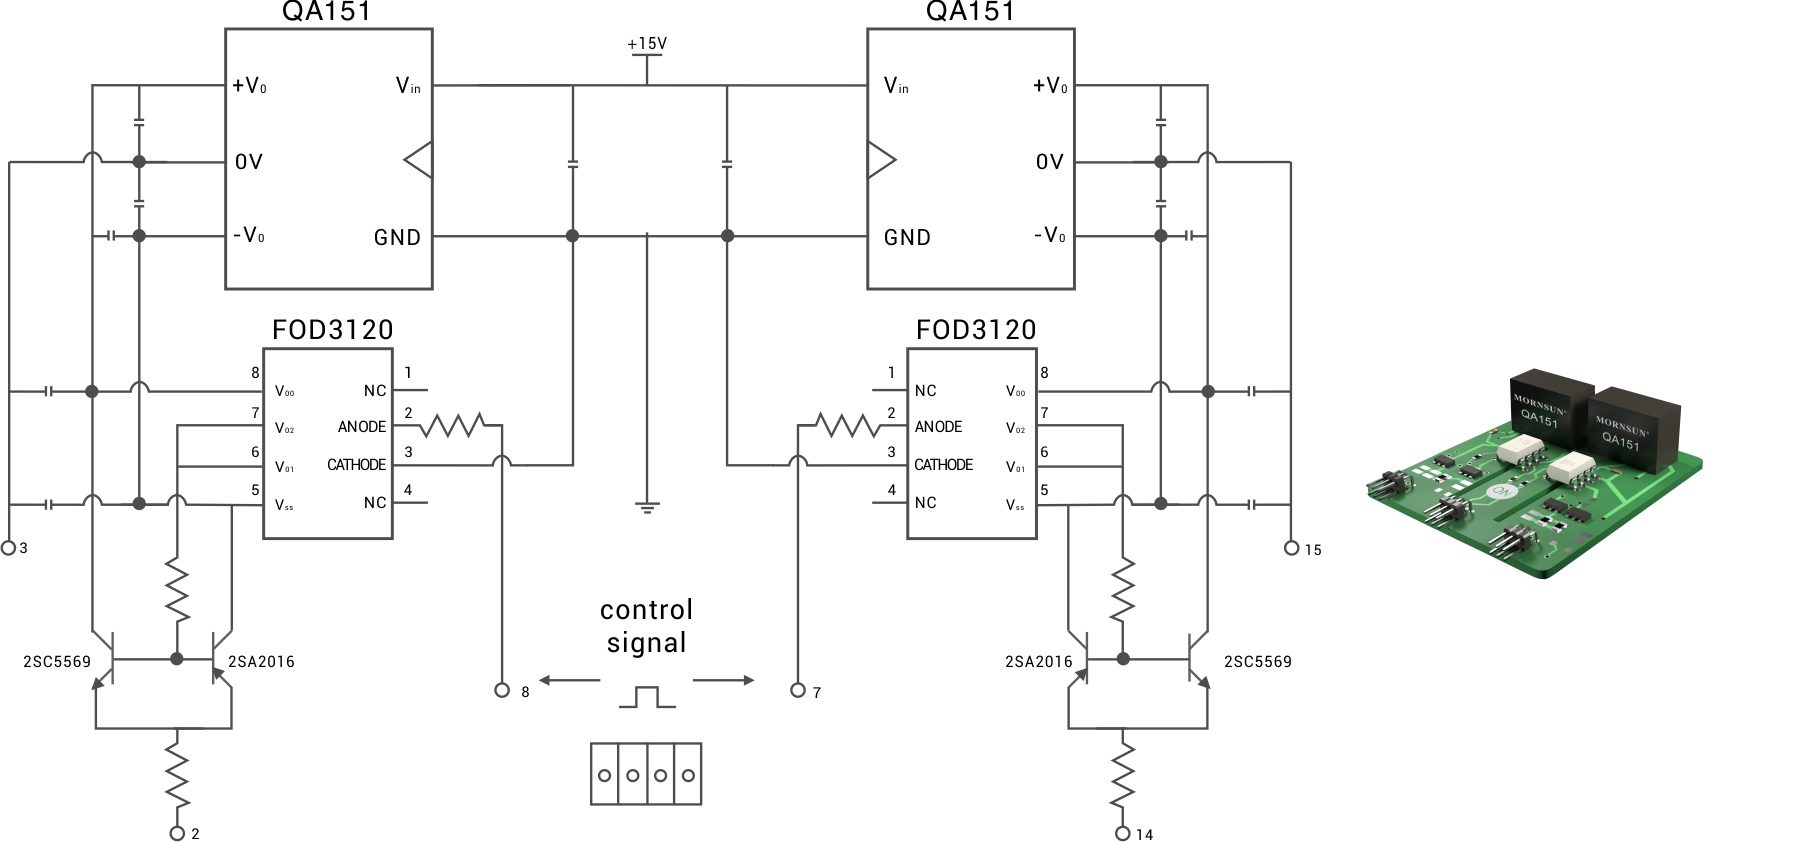 Circuit diagram of the ON Semiconductor driver demo board, with Mornsun’s QA151 power module.